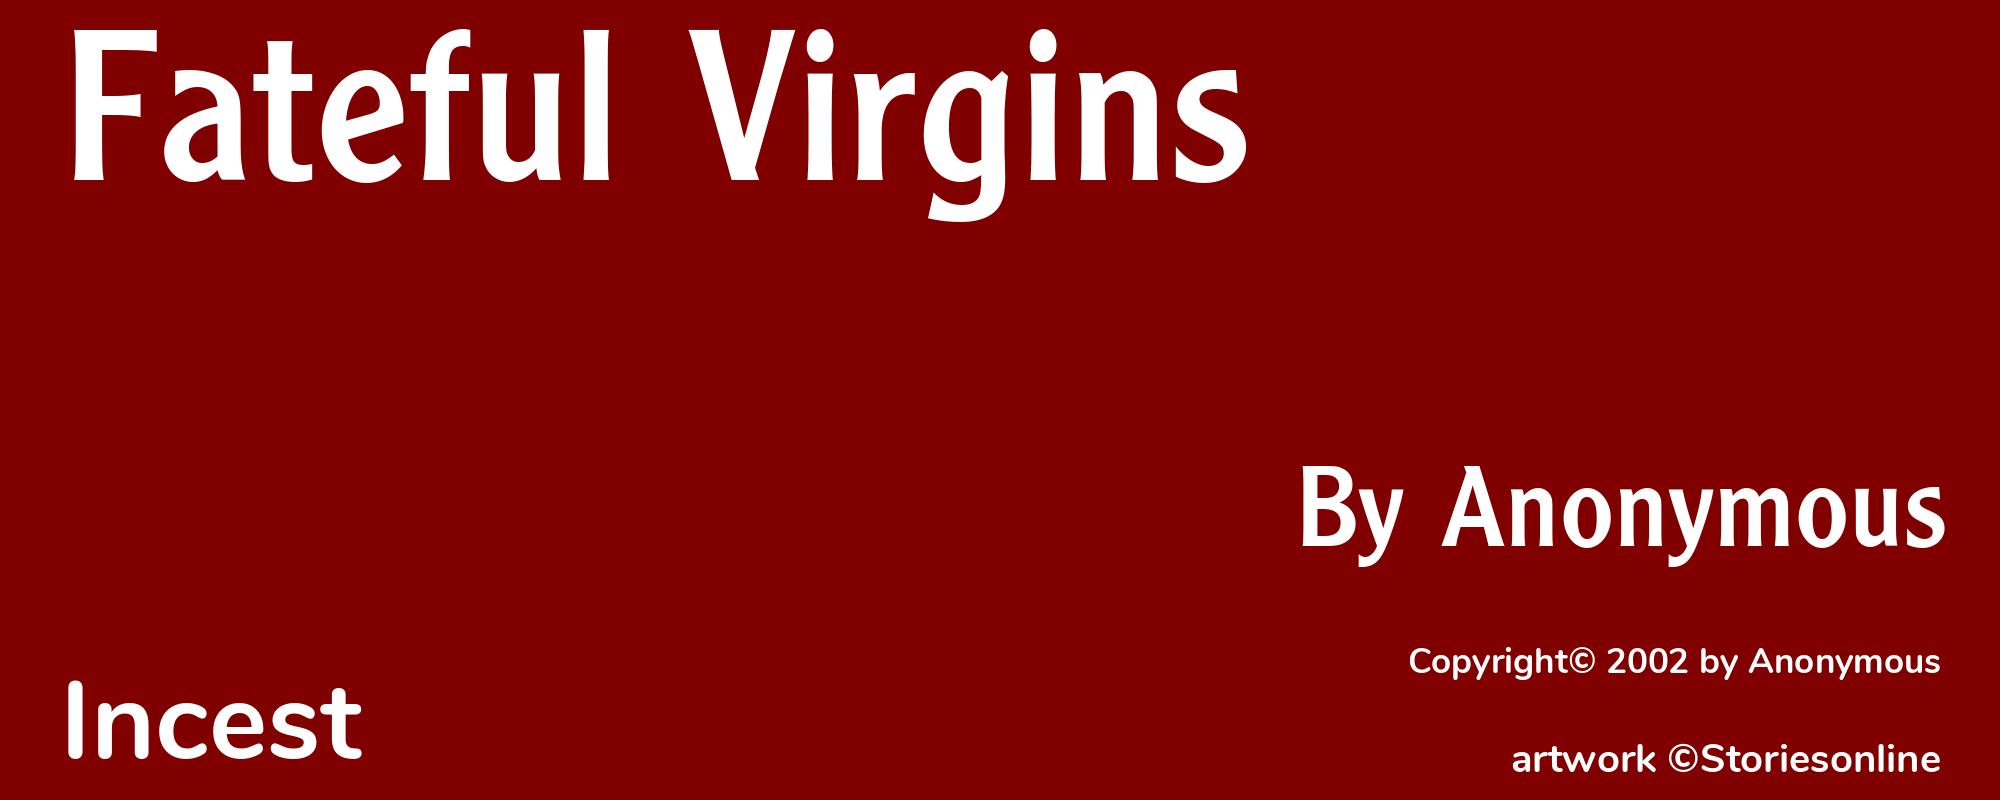 Fateful Virgins - Cover